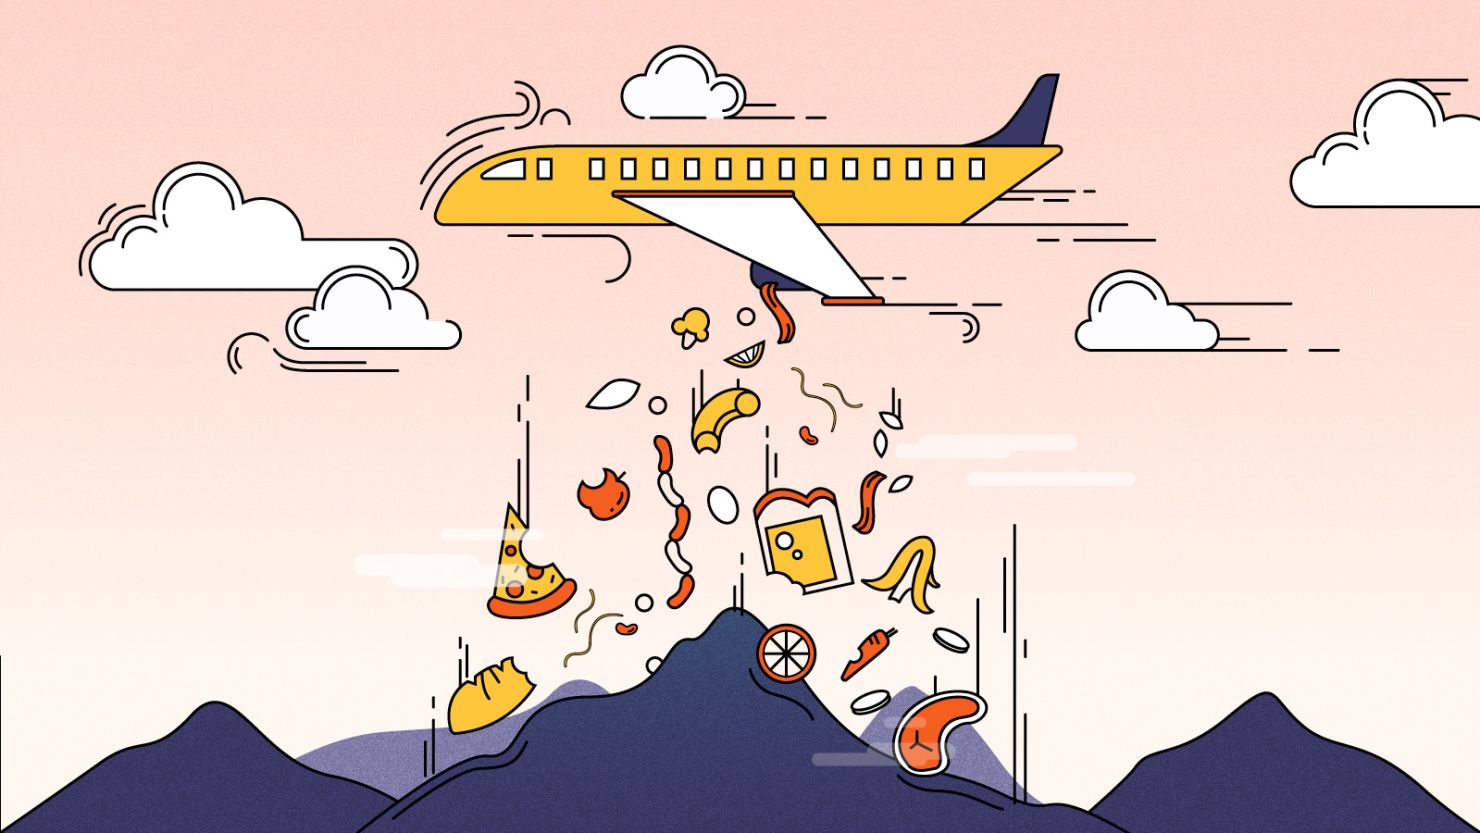 Illustration for airline food waste story